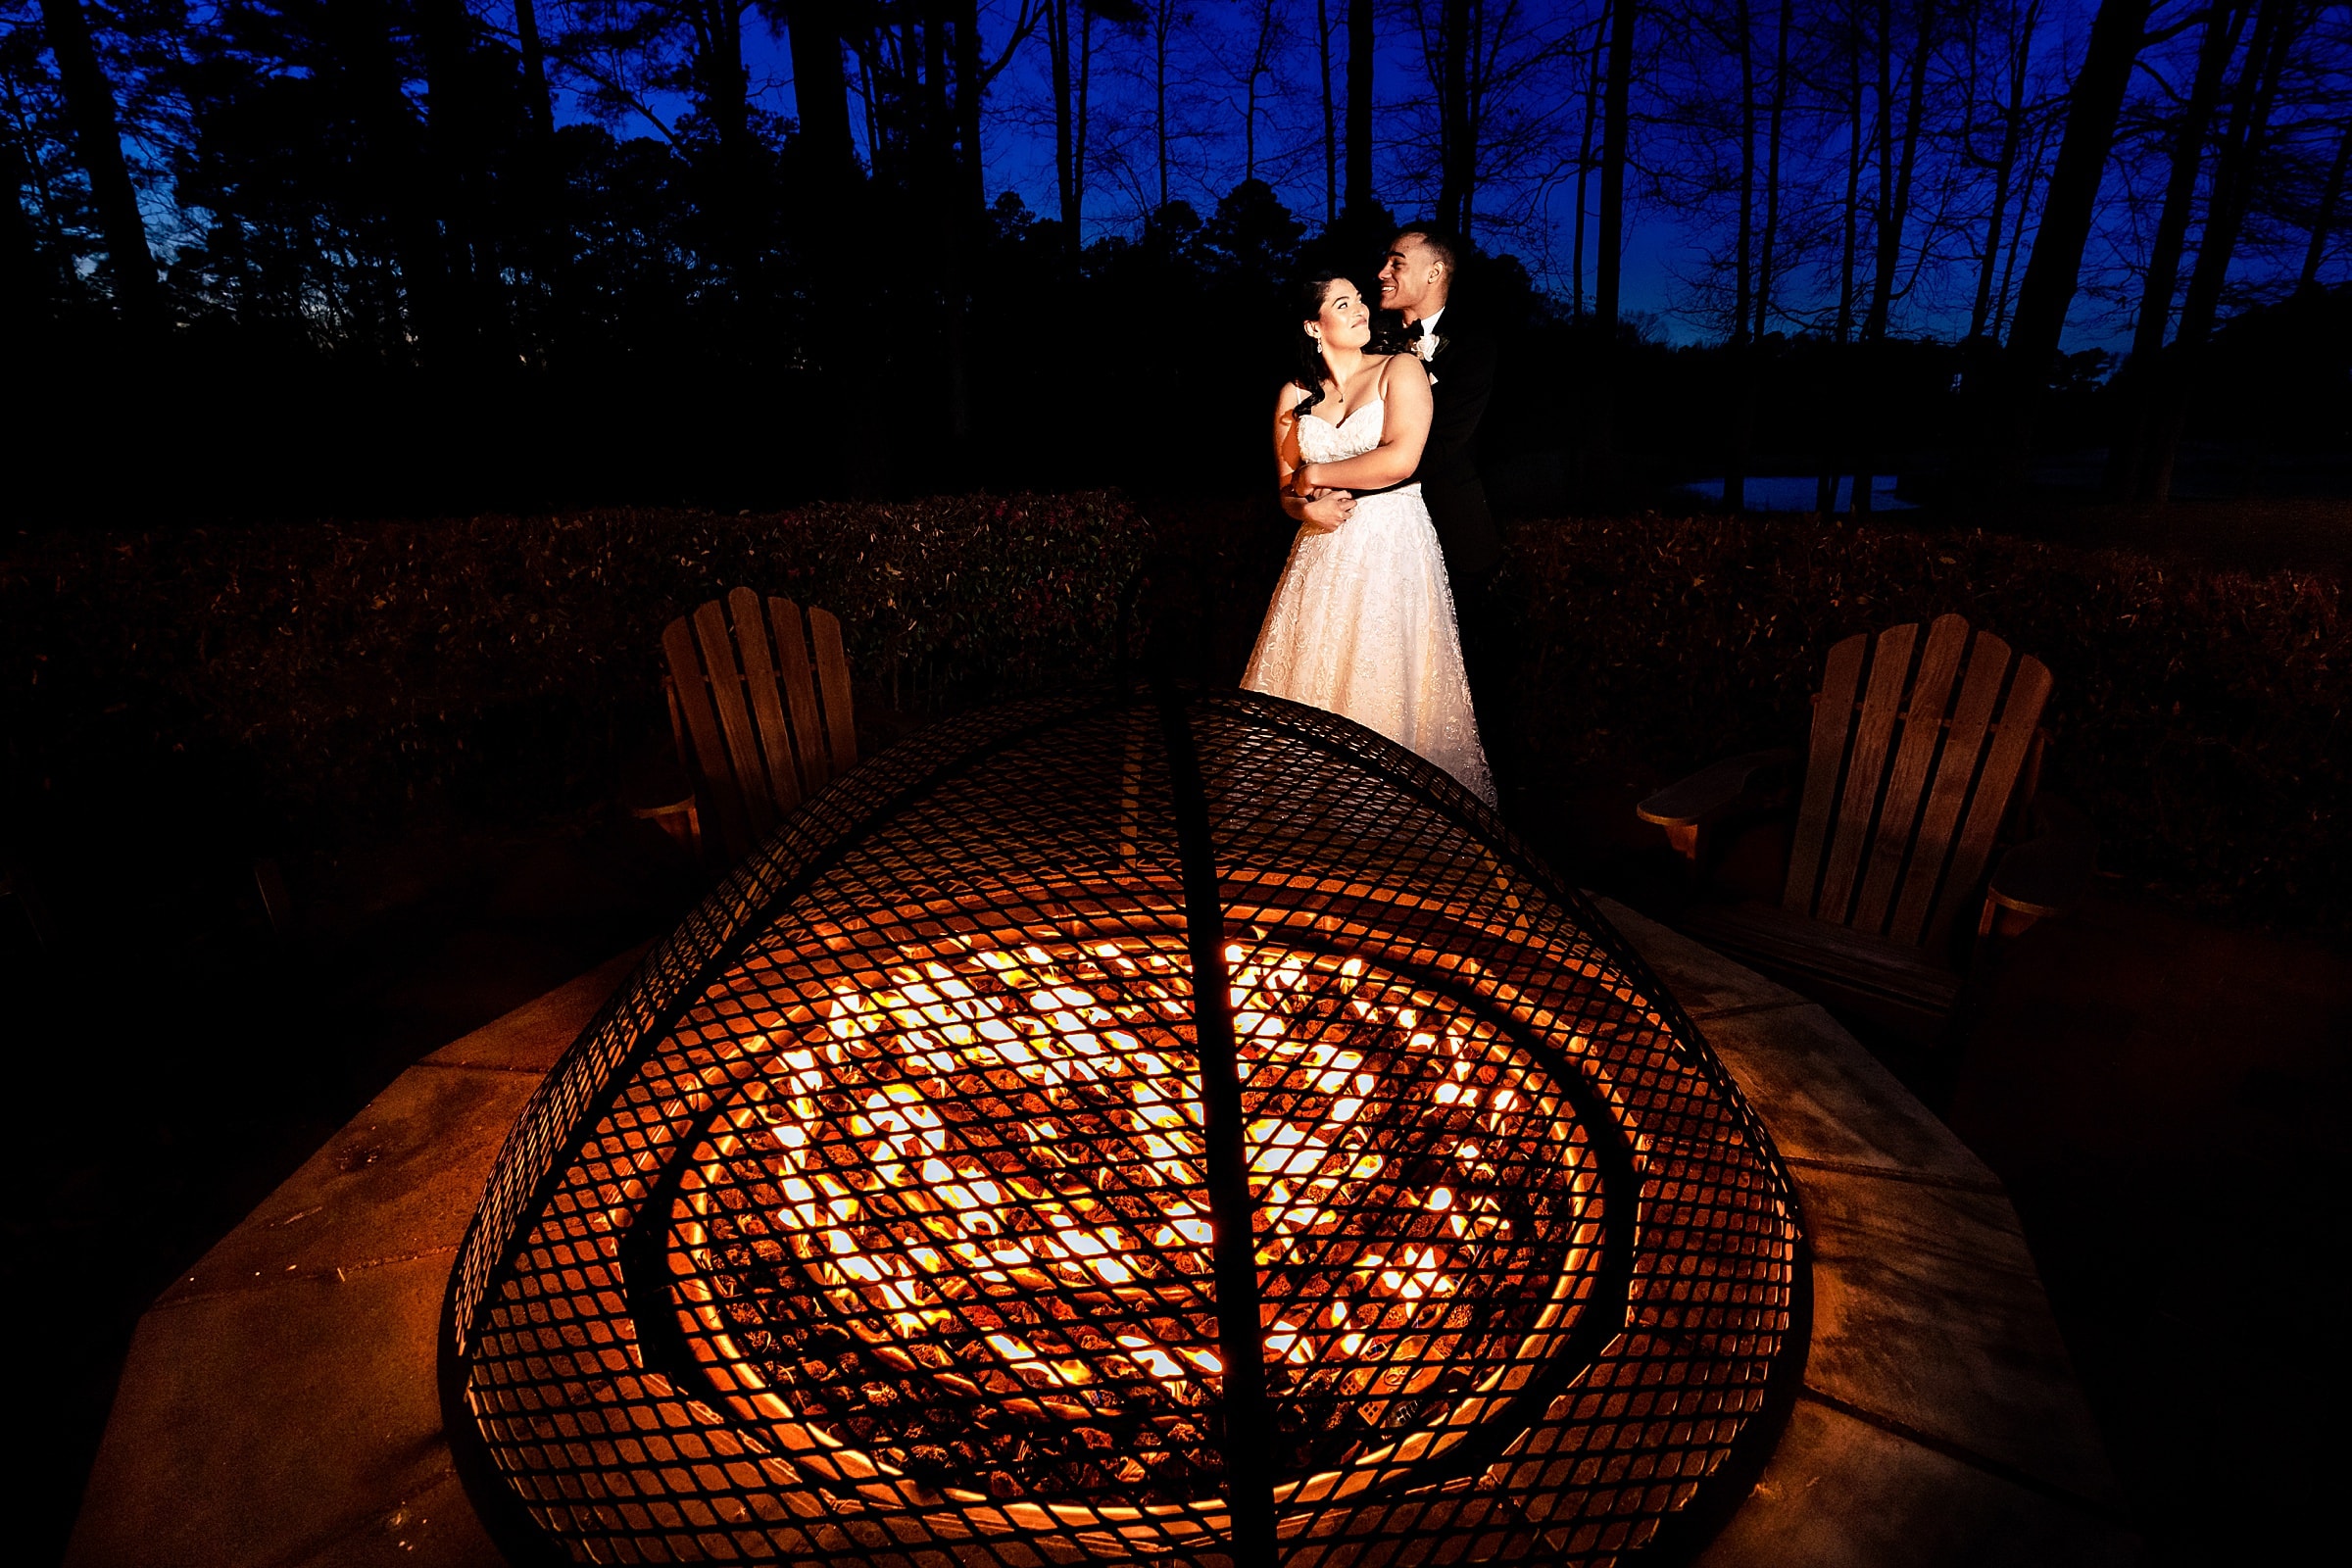 Brier Creek country club wedding photos after dark by Raleigh wedding photographers Kivus & Camera